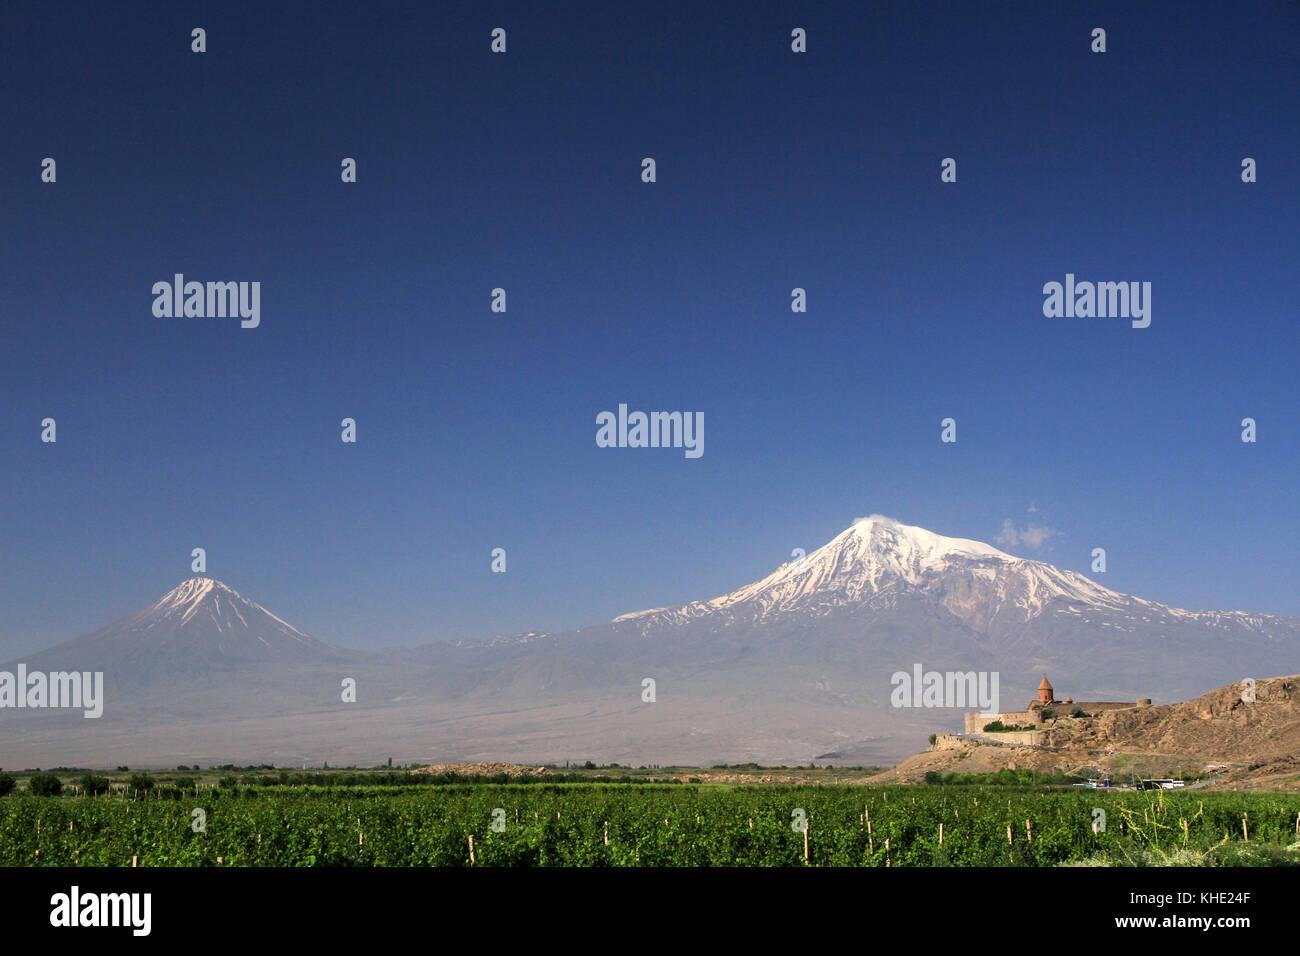 Khor Virap with Mount Ararat in background, Armenia Stock Photo